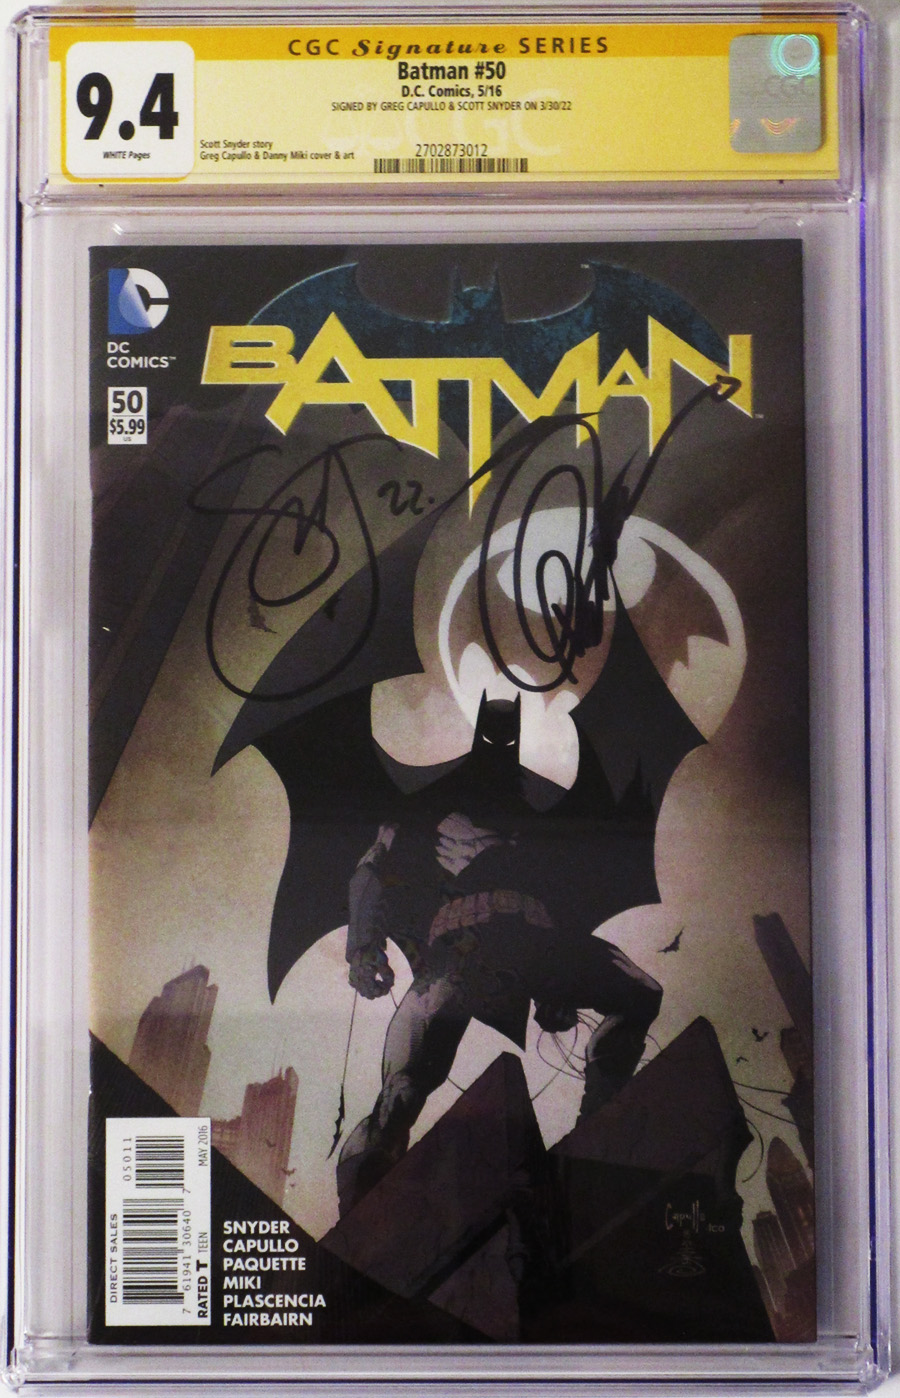 Batman Vol 2 #50 Cover M Regular Greg Capullo Cover Signed By Scott Snyder and Greg Capullo CGC 9.4